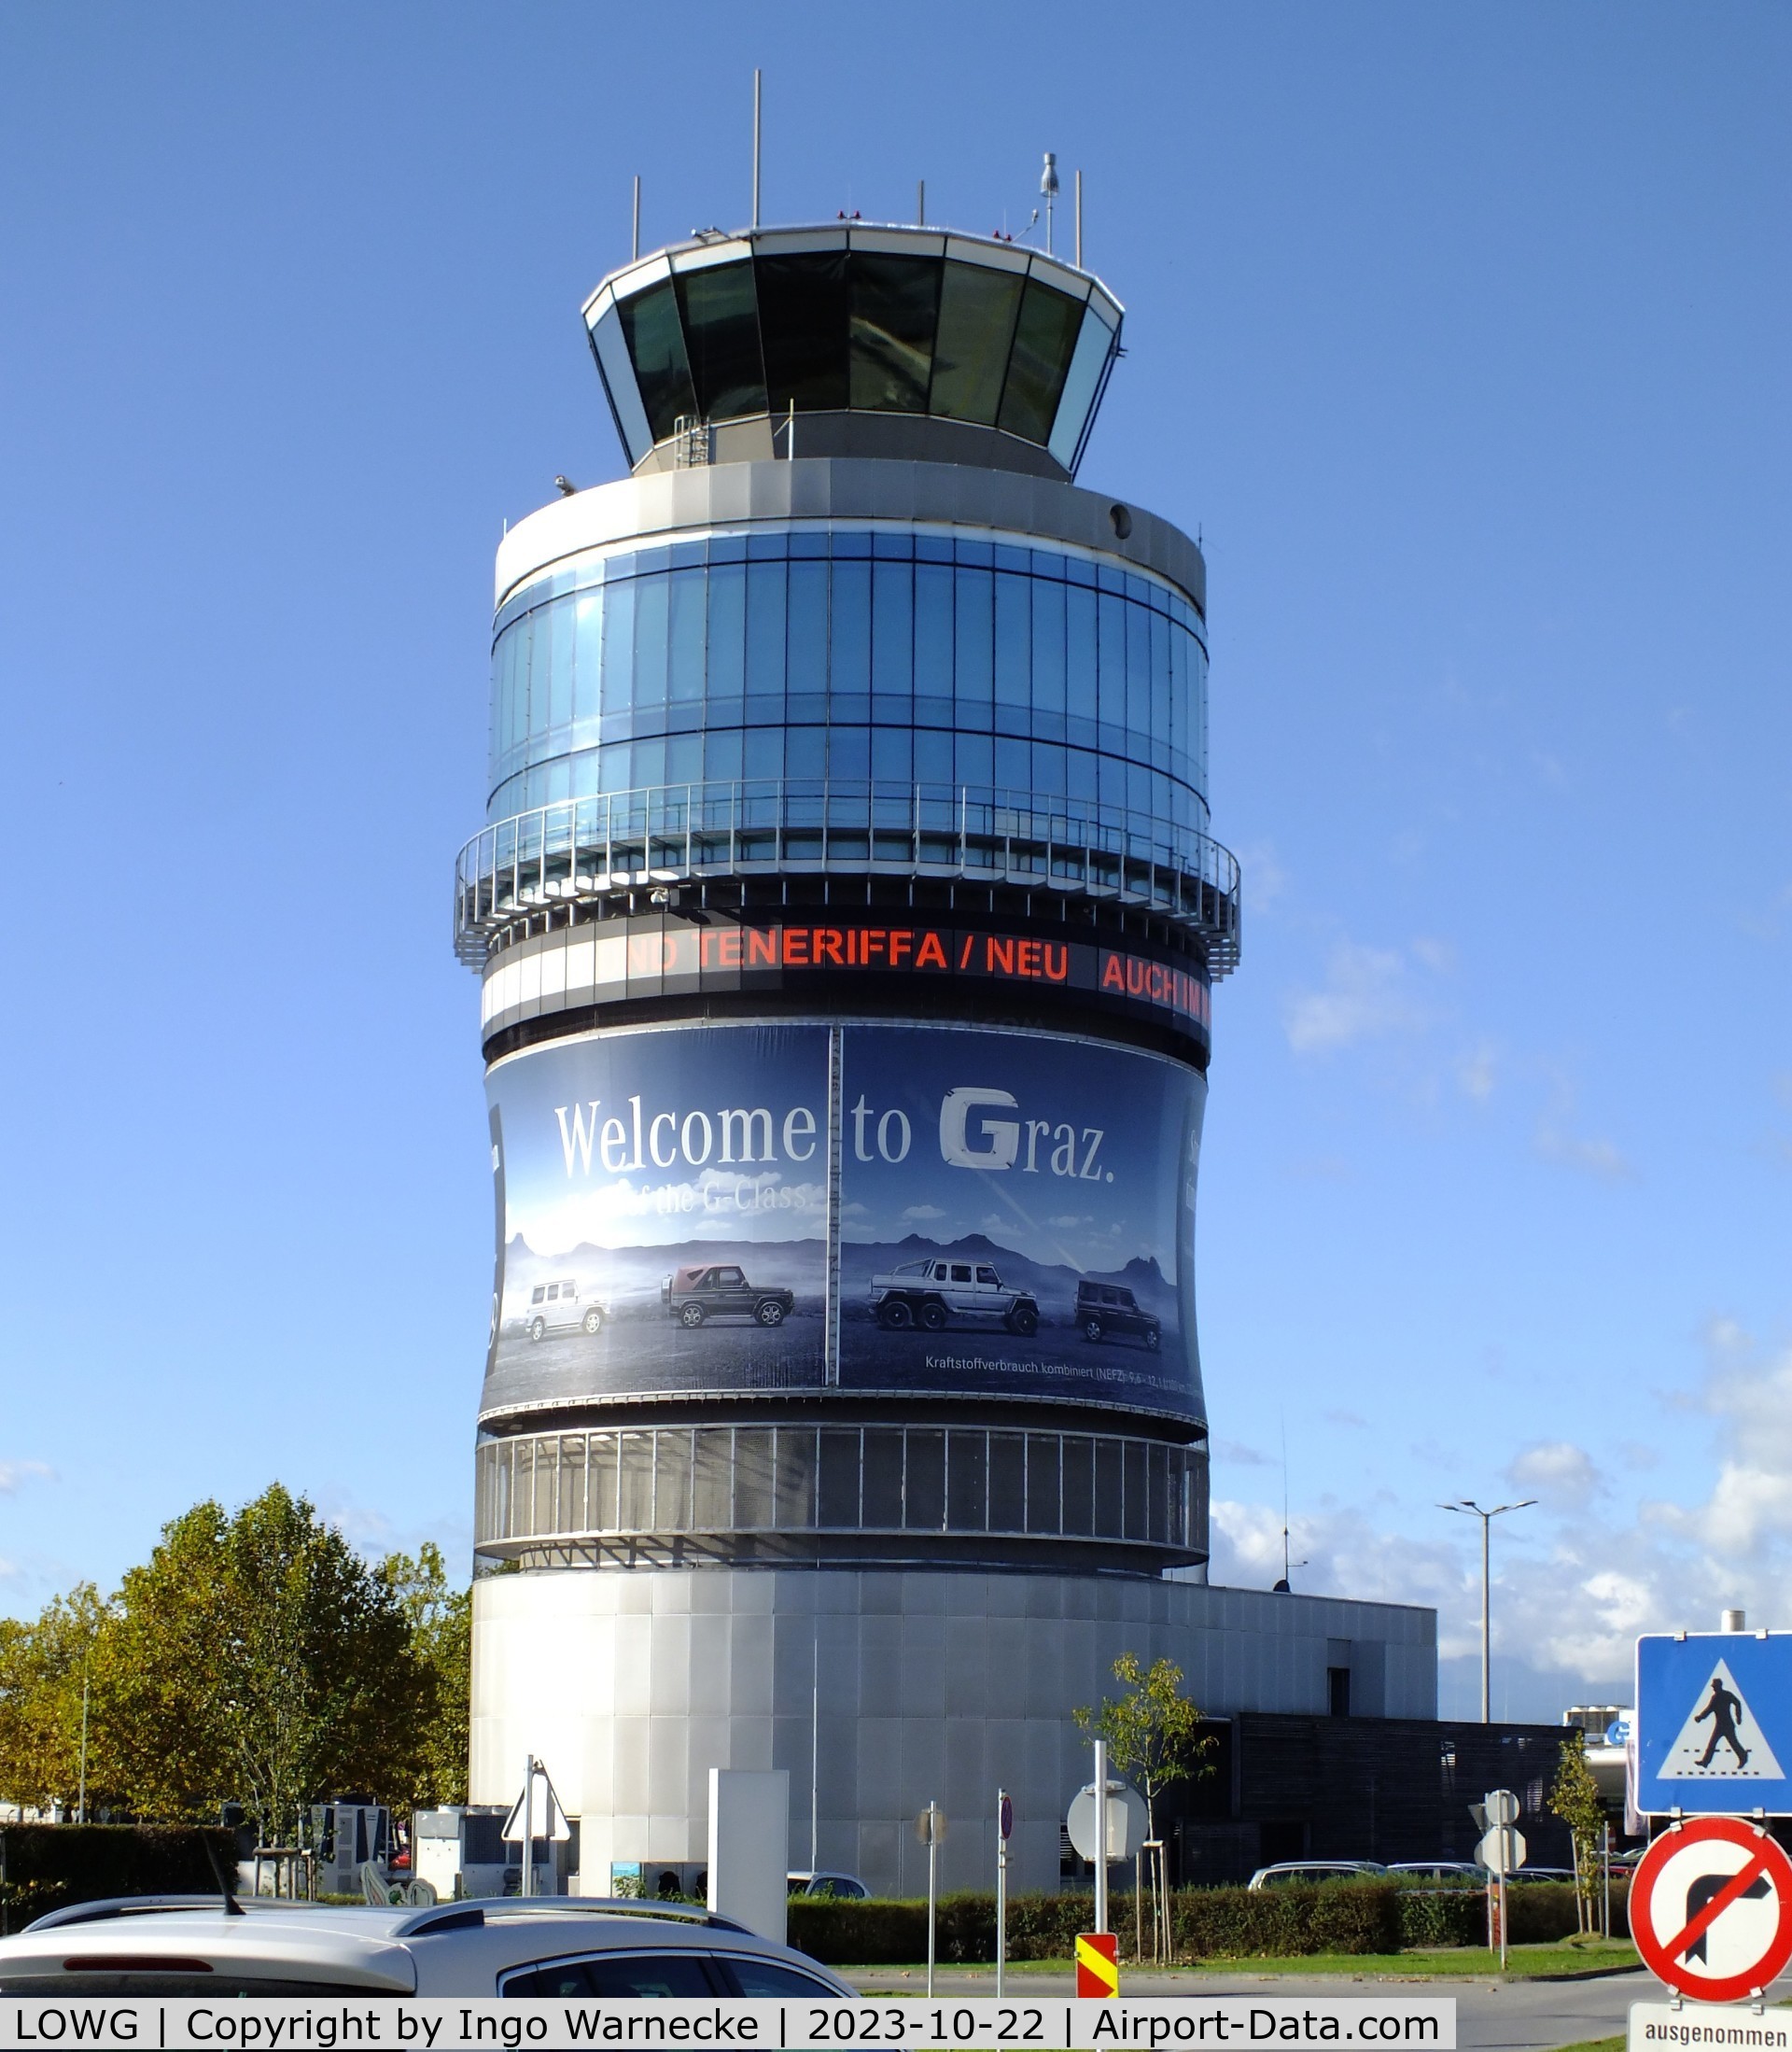 Graz Airport, Graz Austria (LOWG) - landside view of the tower at Graz airport